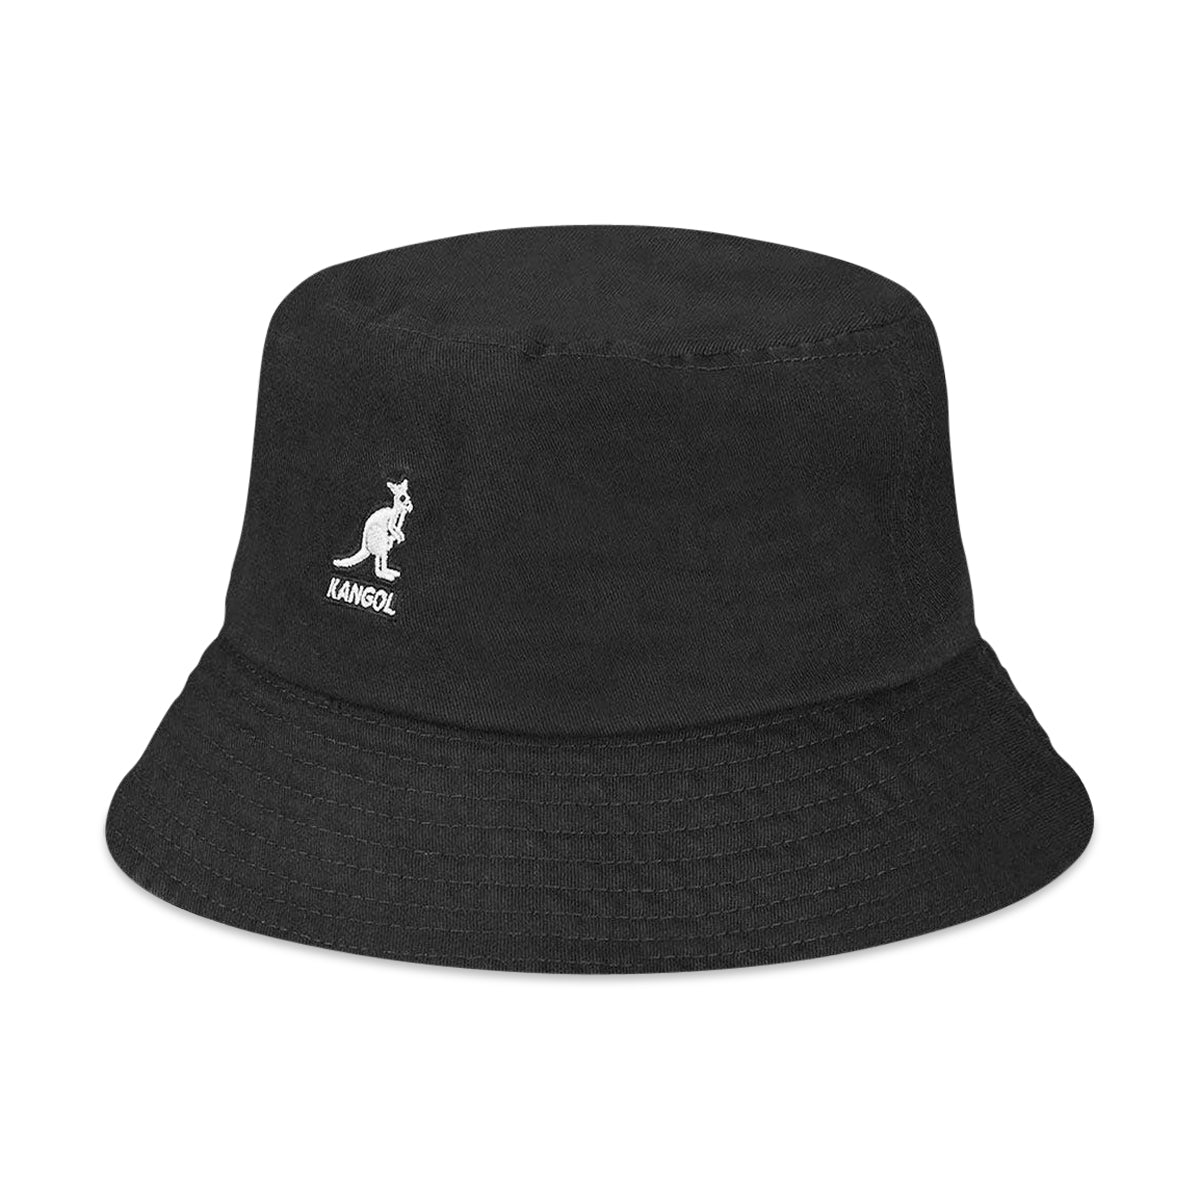 K-A (Kangol washed bucket hat black) 22494300